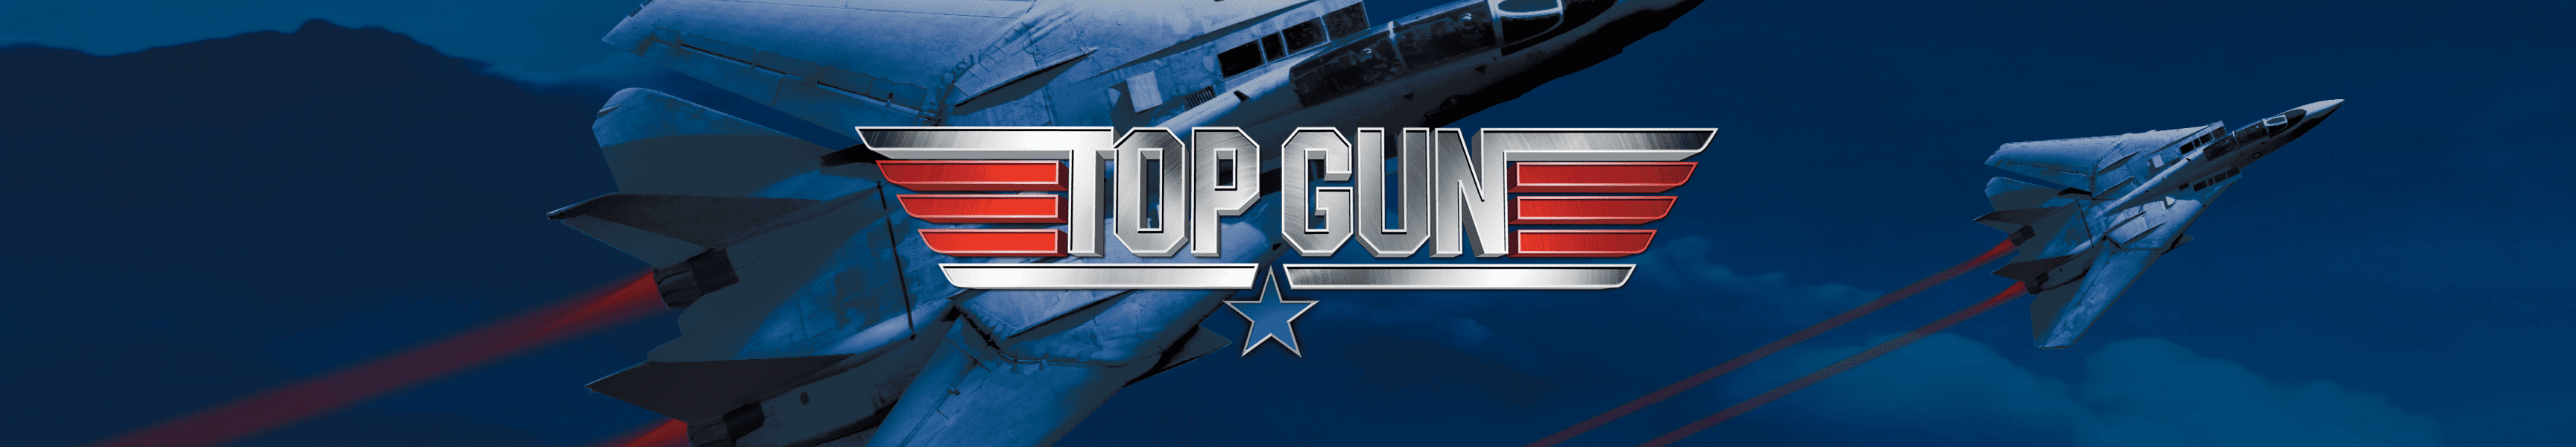 Top Gun Autocollants